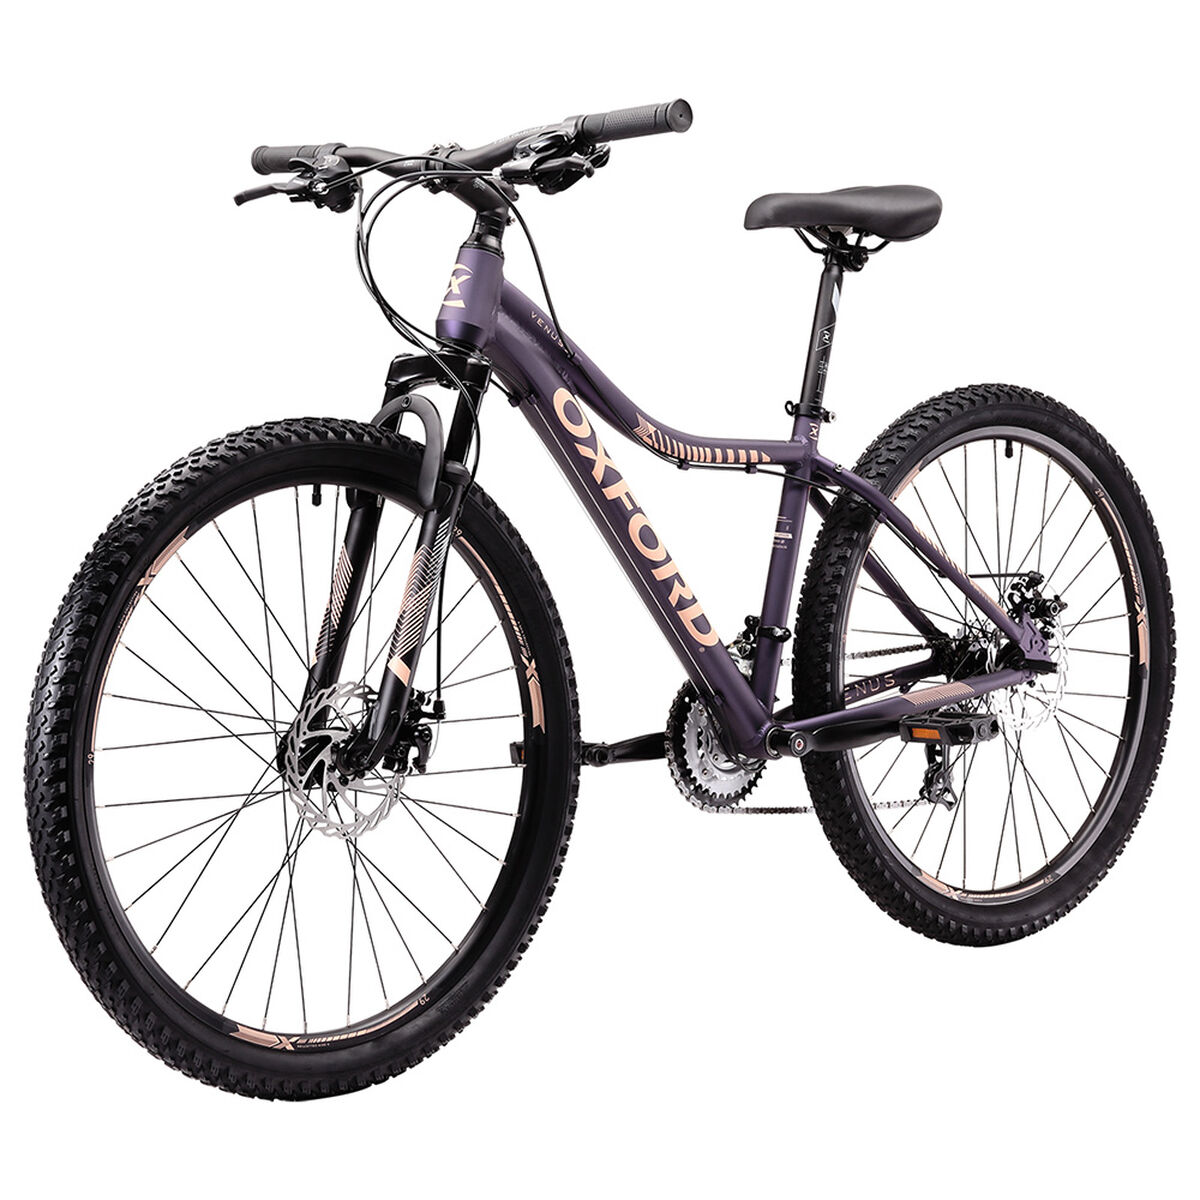 Bicicleta Oxford Mujer BA2952 Aro 29